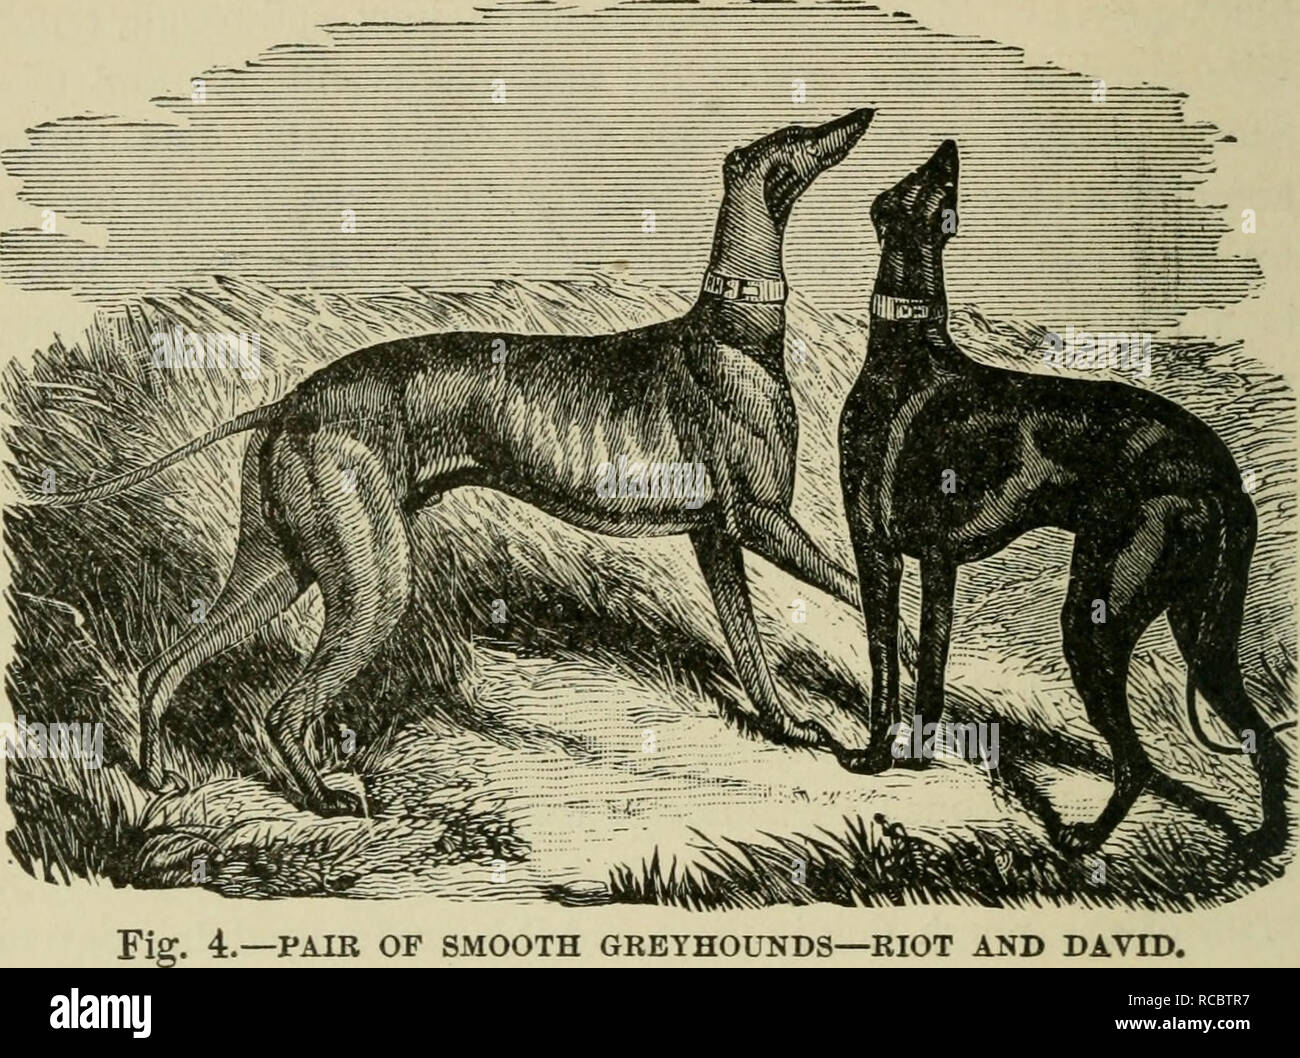 do greyhounds hunt